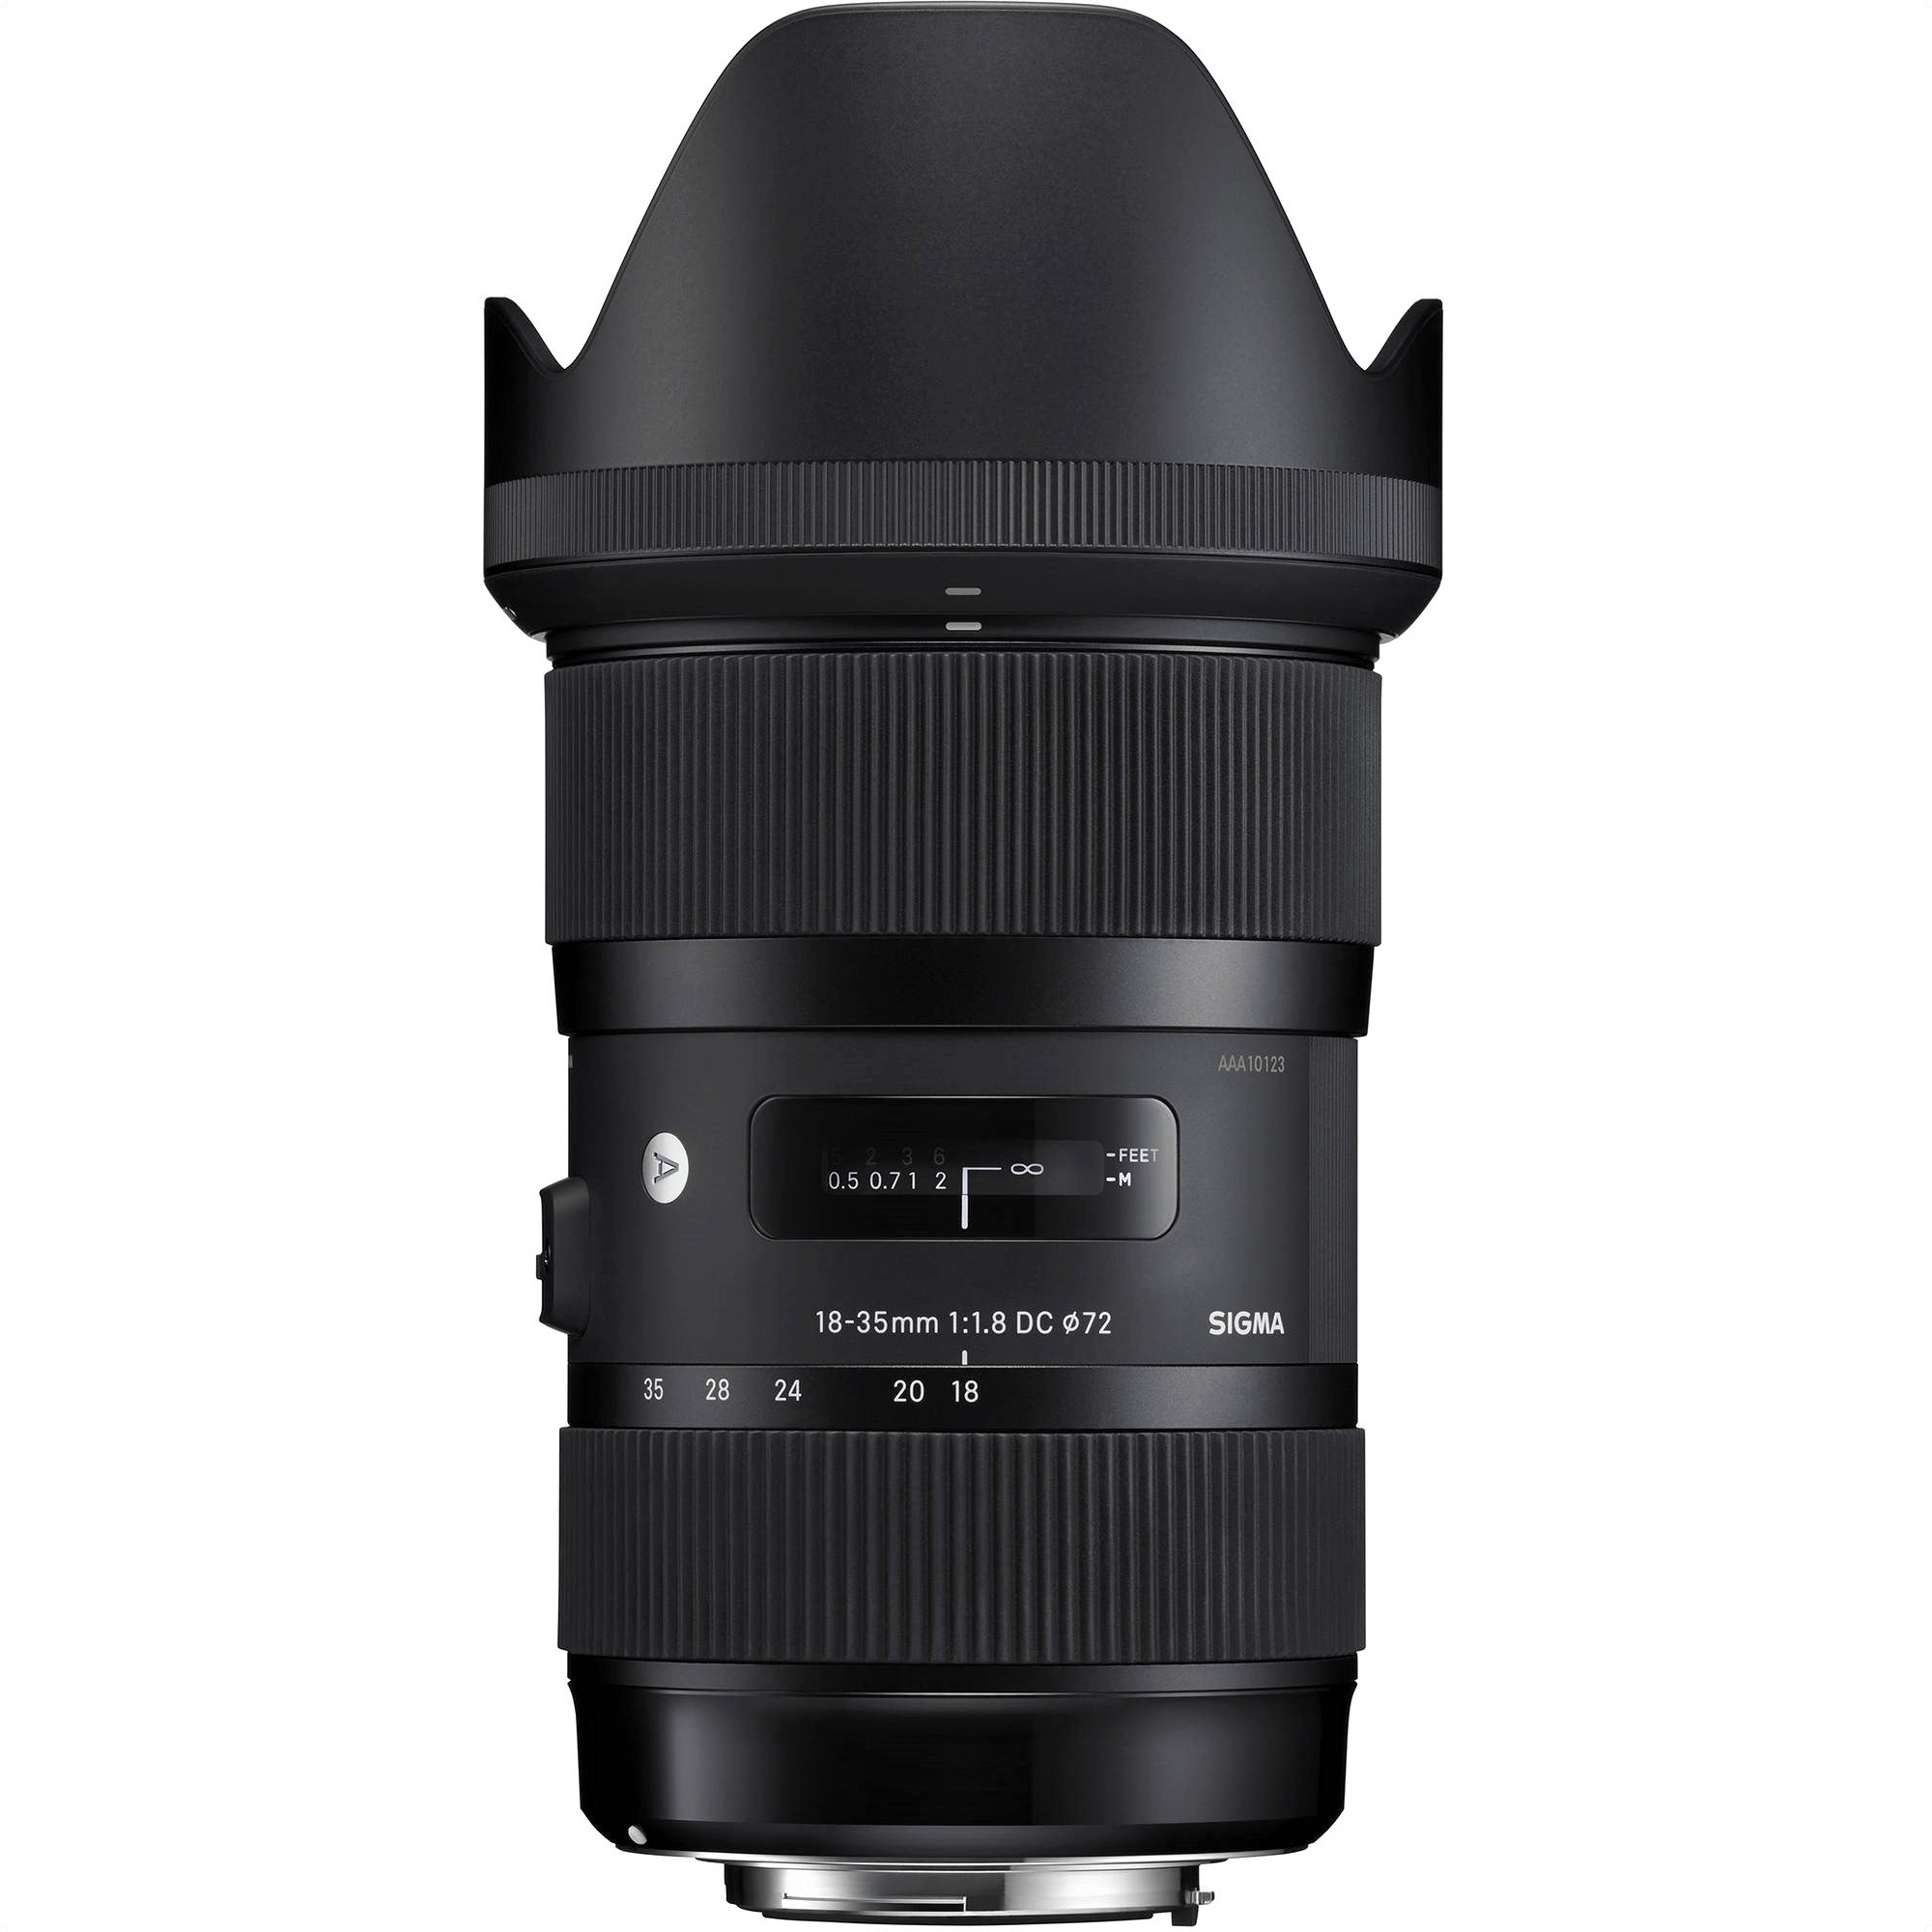 Sigma Lens Hood Attached to 18-35mm F1.8 Art DC HSM Art Lens